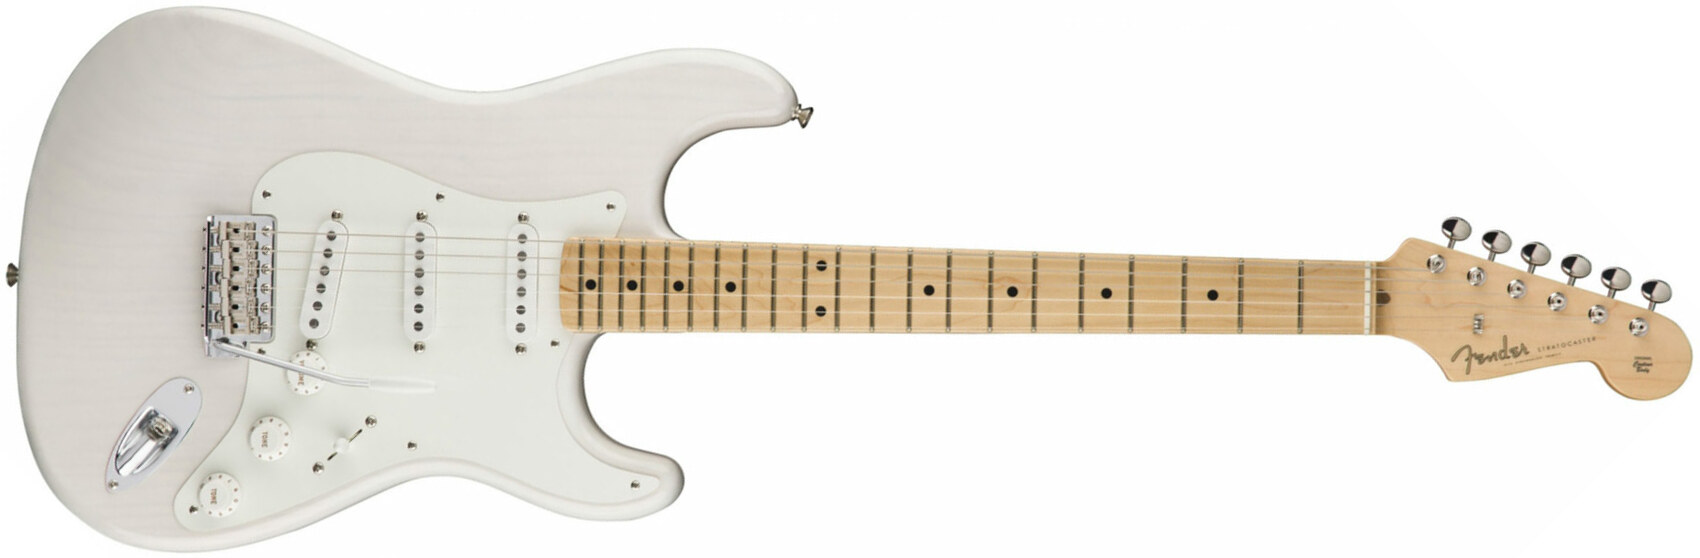 Fender Strat '50s American Original Usa Sss Mn - White Blonde - Guitarra eléctrica con forma de str. - Main picture